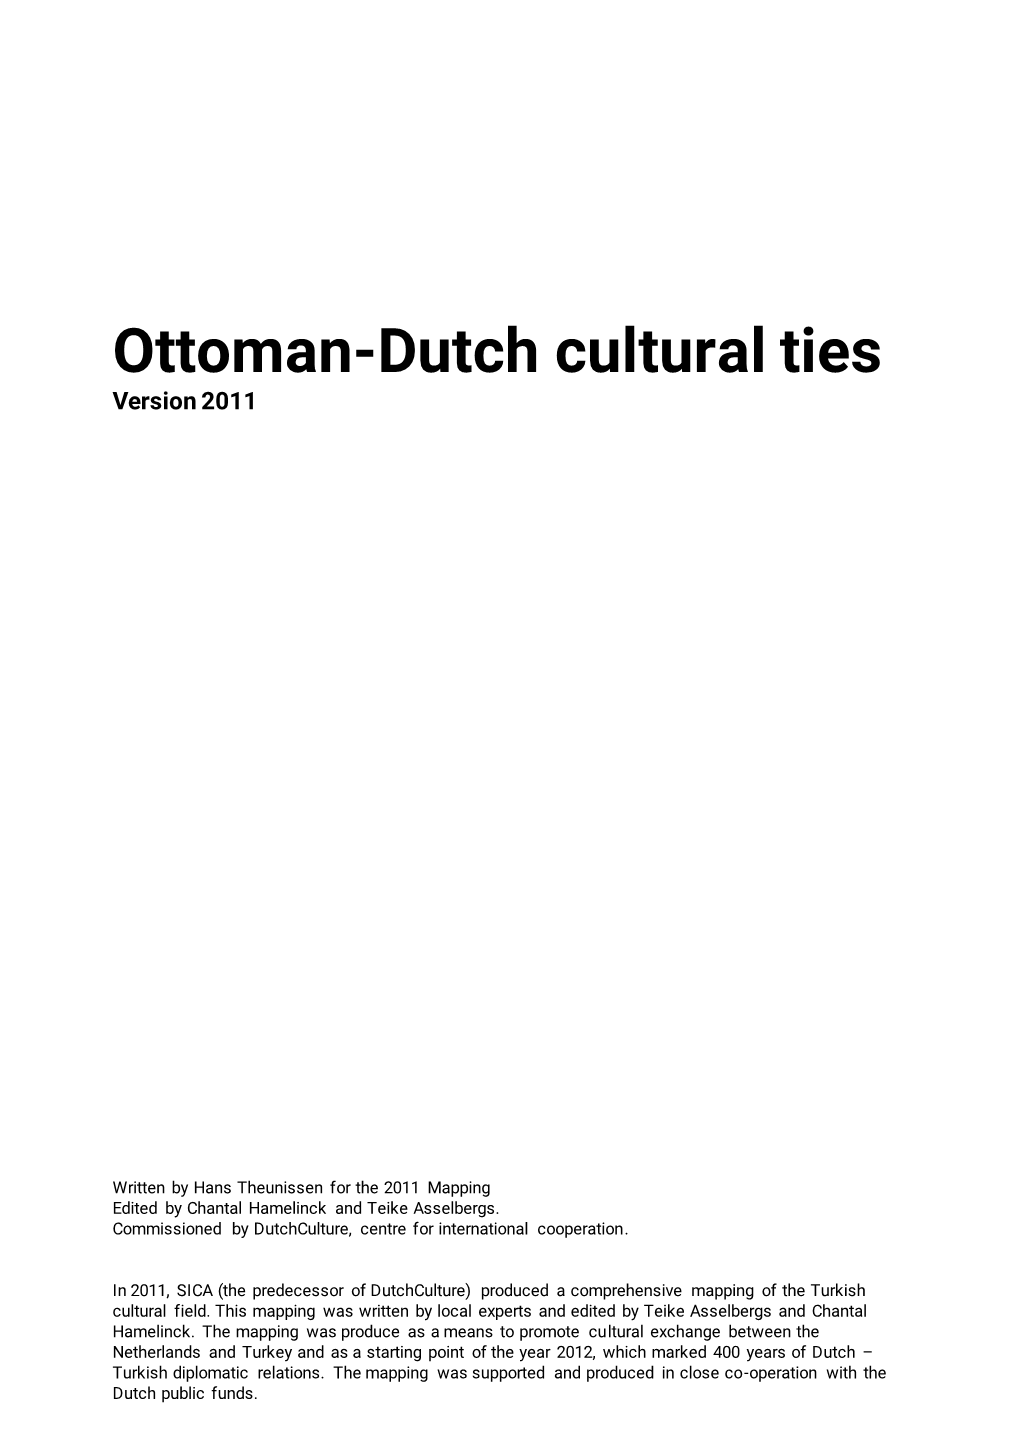 Ottoman-Dutch Cultural Ties Version 2011